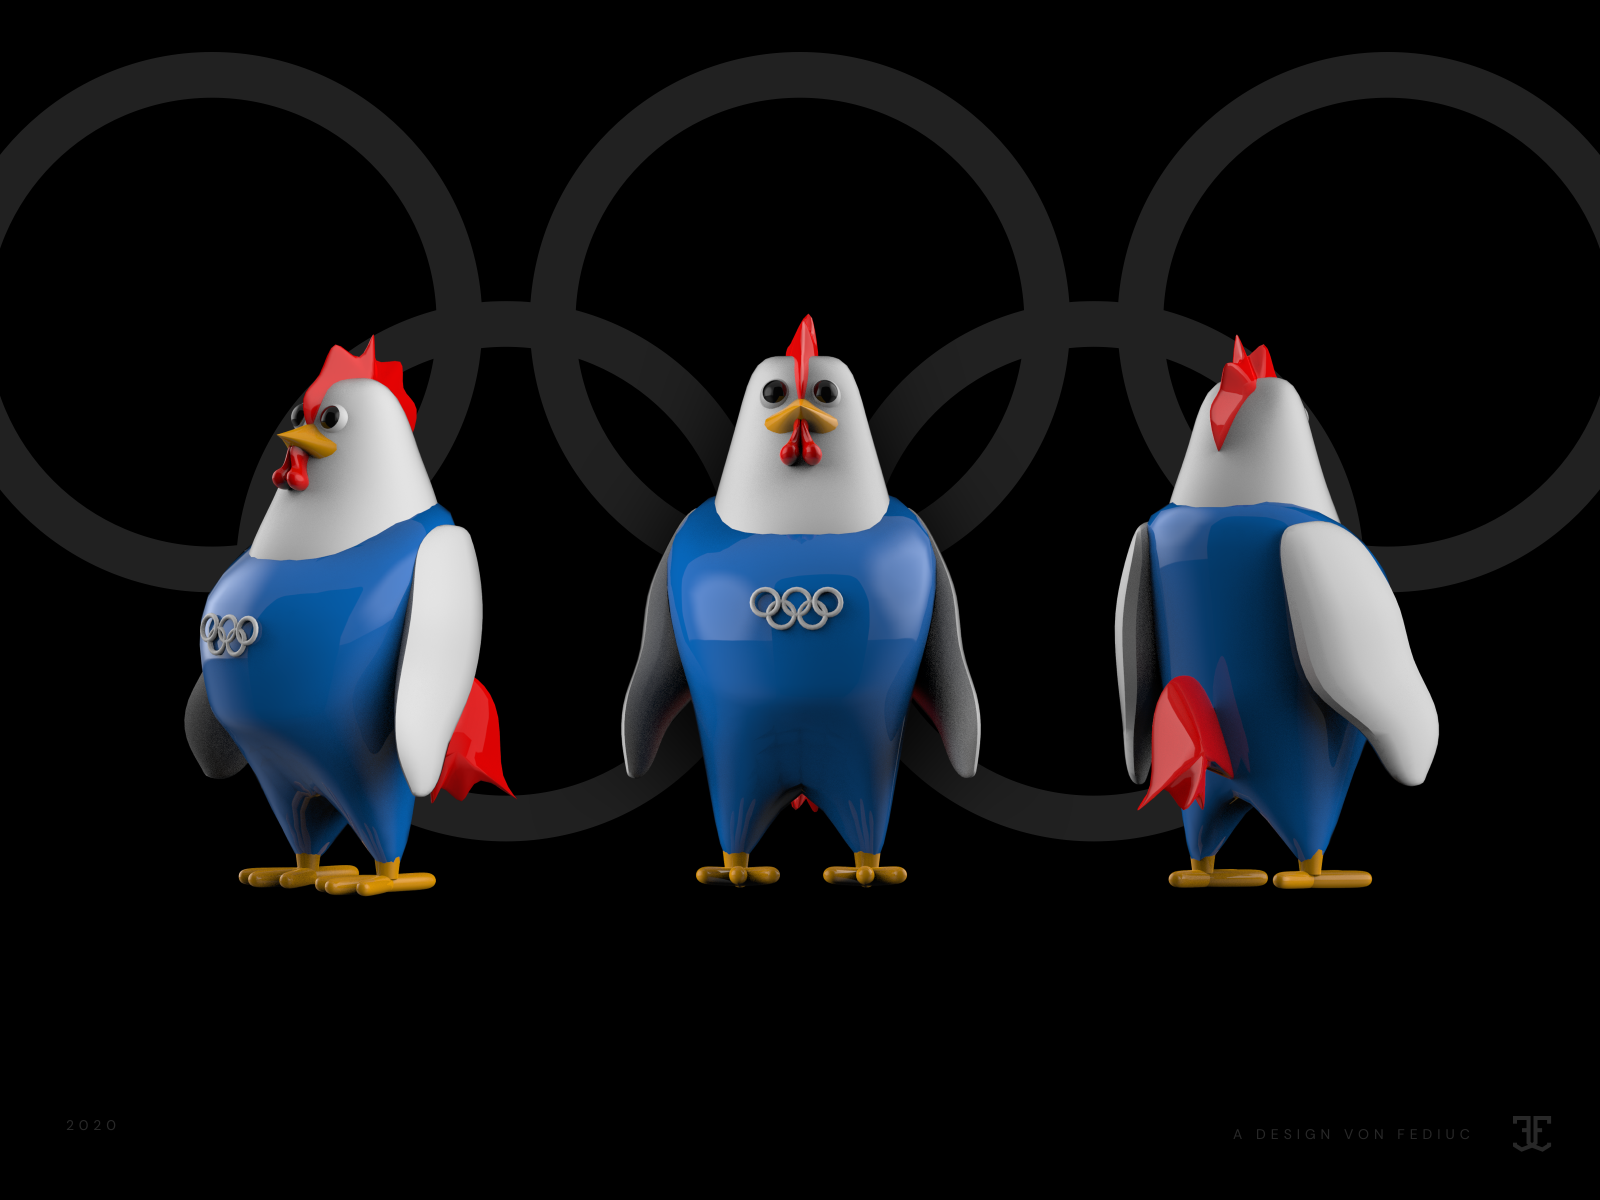 Mascot concept for Olympics, Paris 2024 by Octavian Fediuc on Dribbble